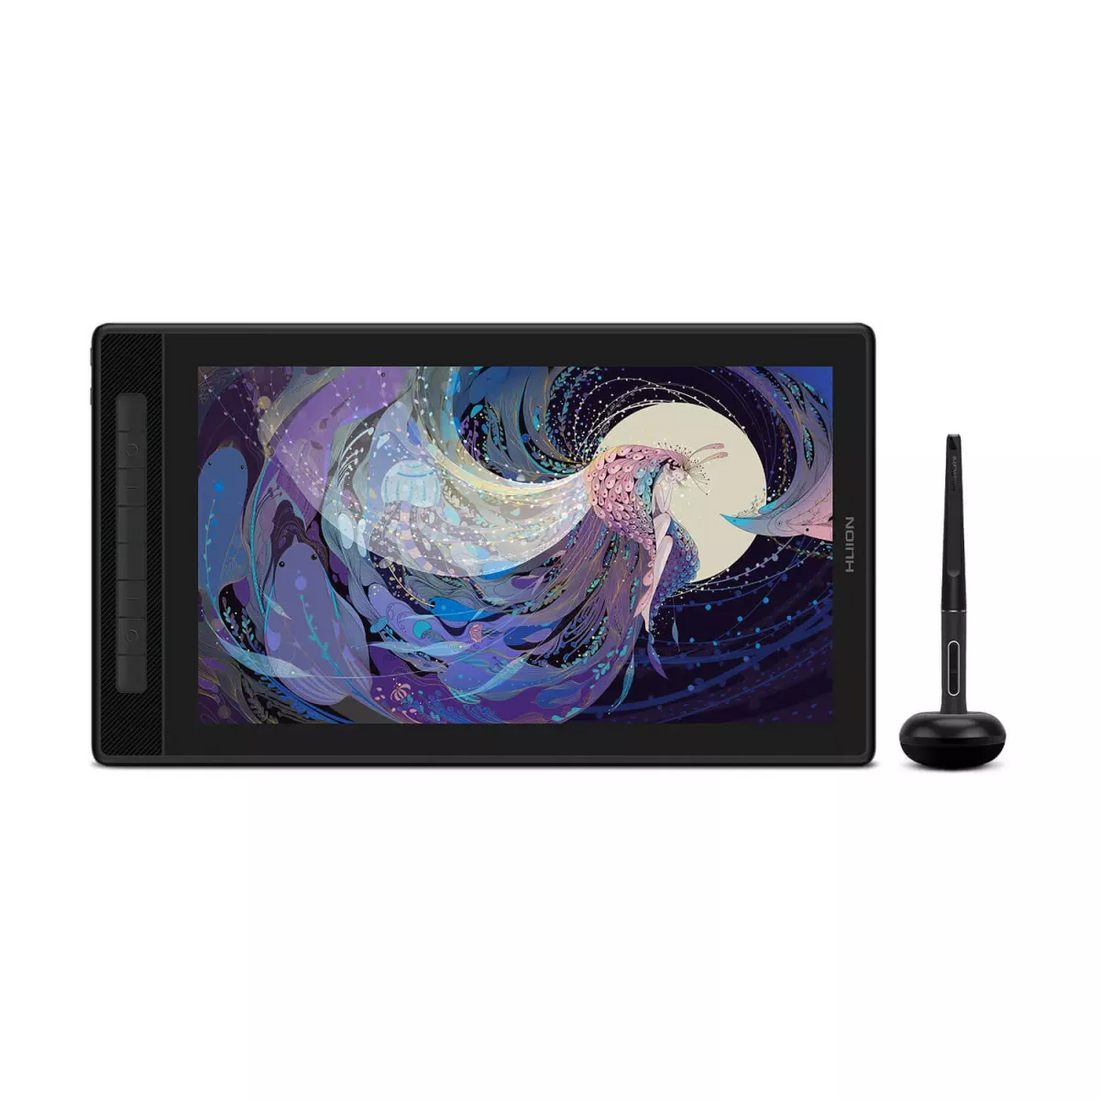 Huion GT1602 - Kamvas Pro 16 2.5K UHD Display Graphic Tablet